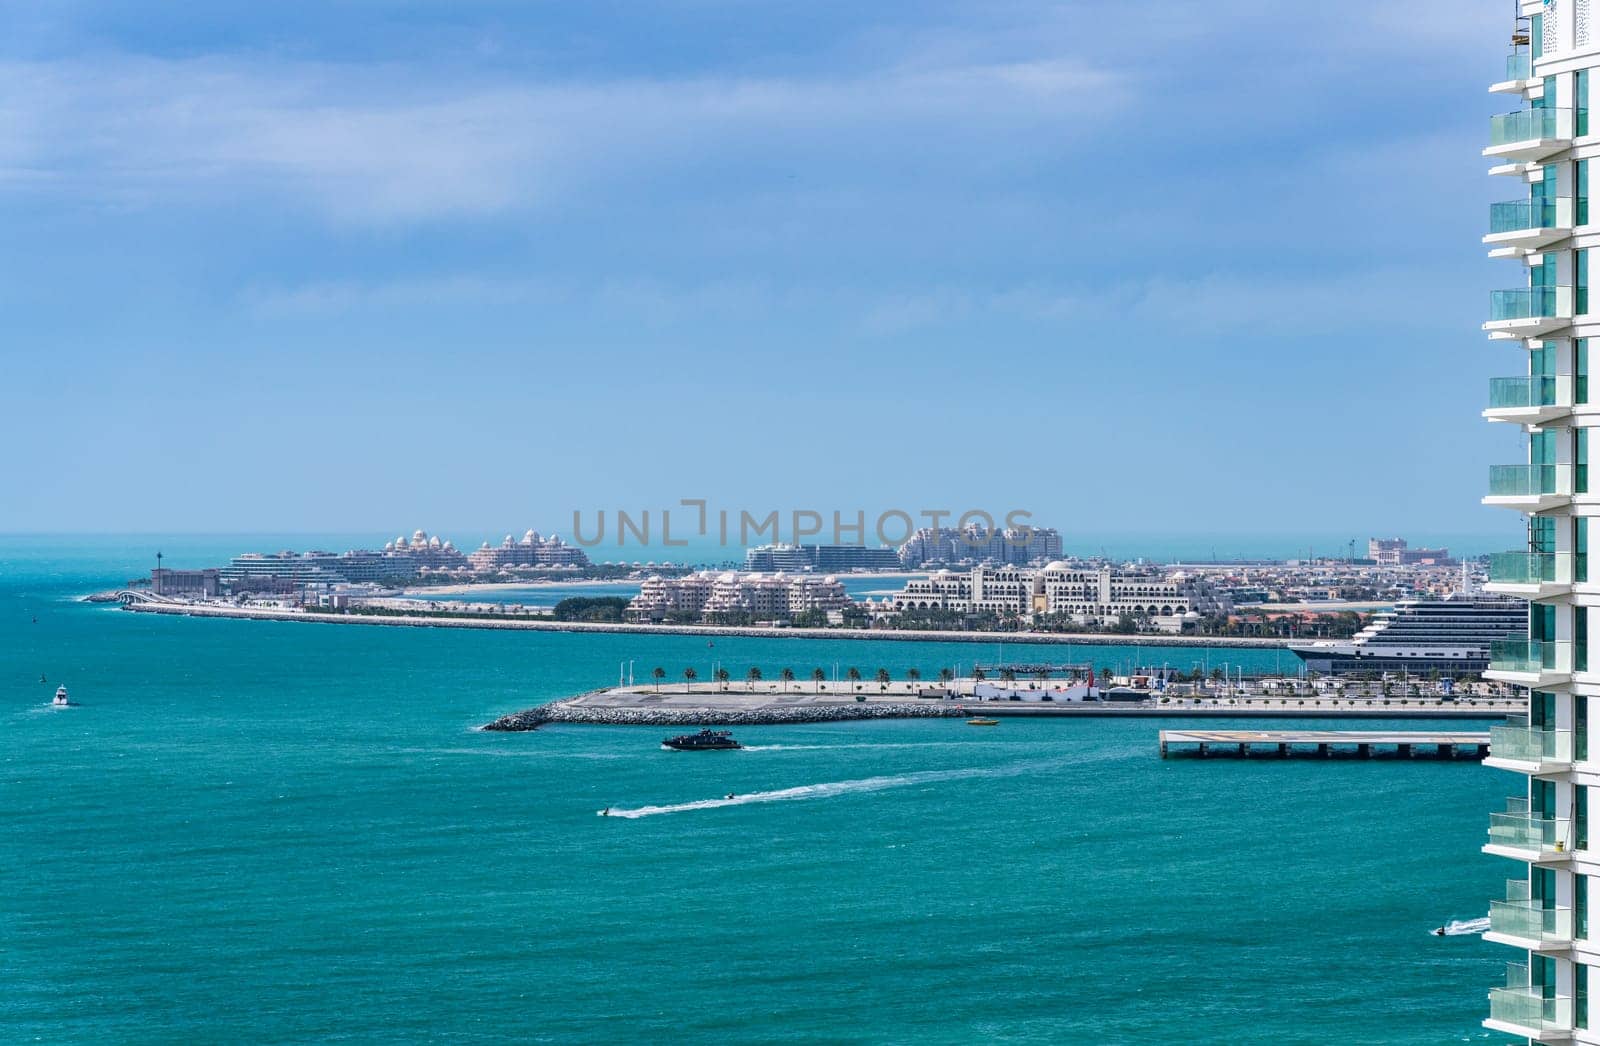 Cruise ship in port alongside the island of Palm Jumeirah off JBR beach in Dubai